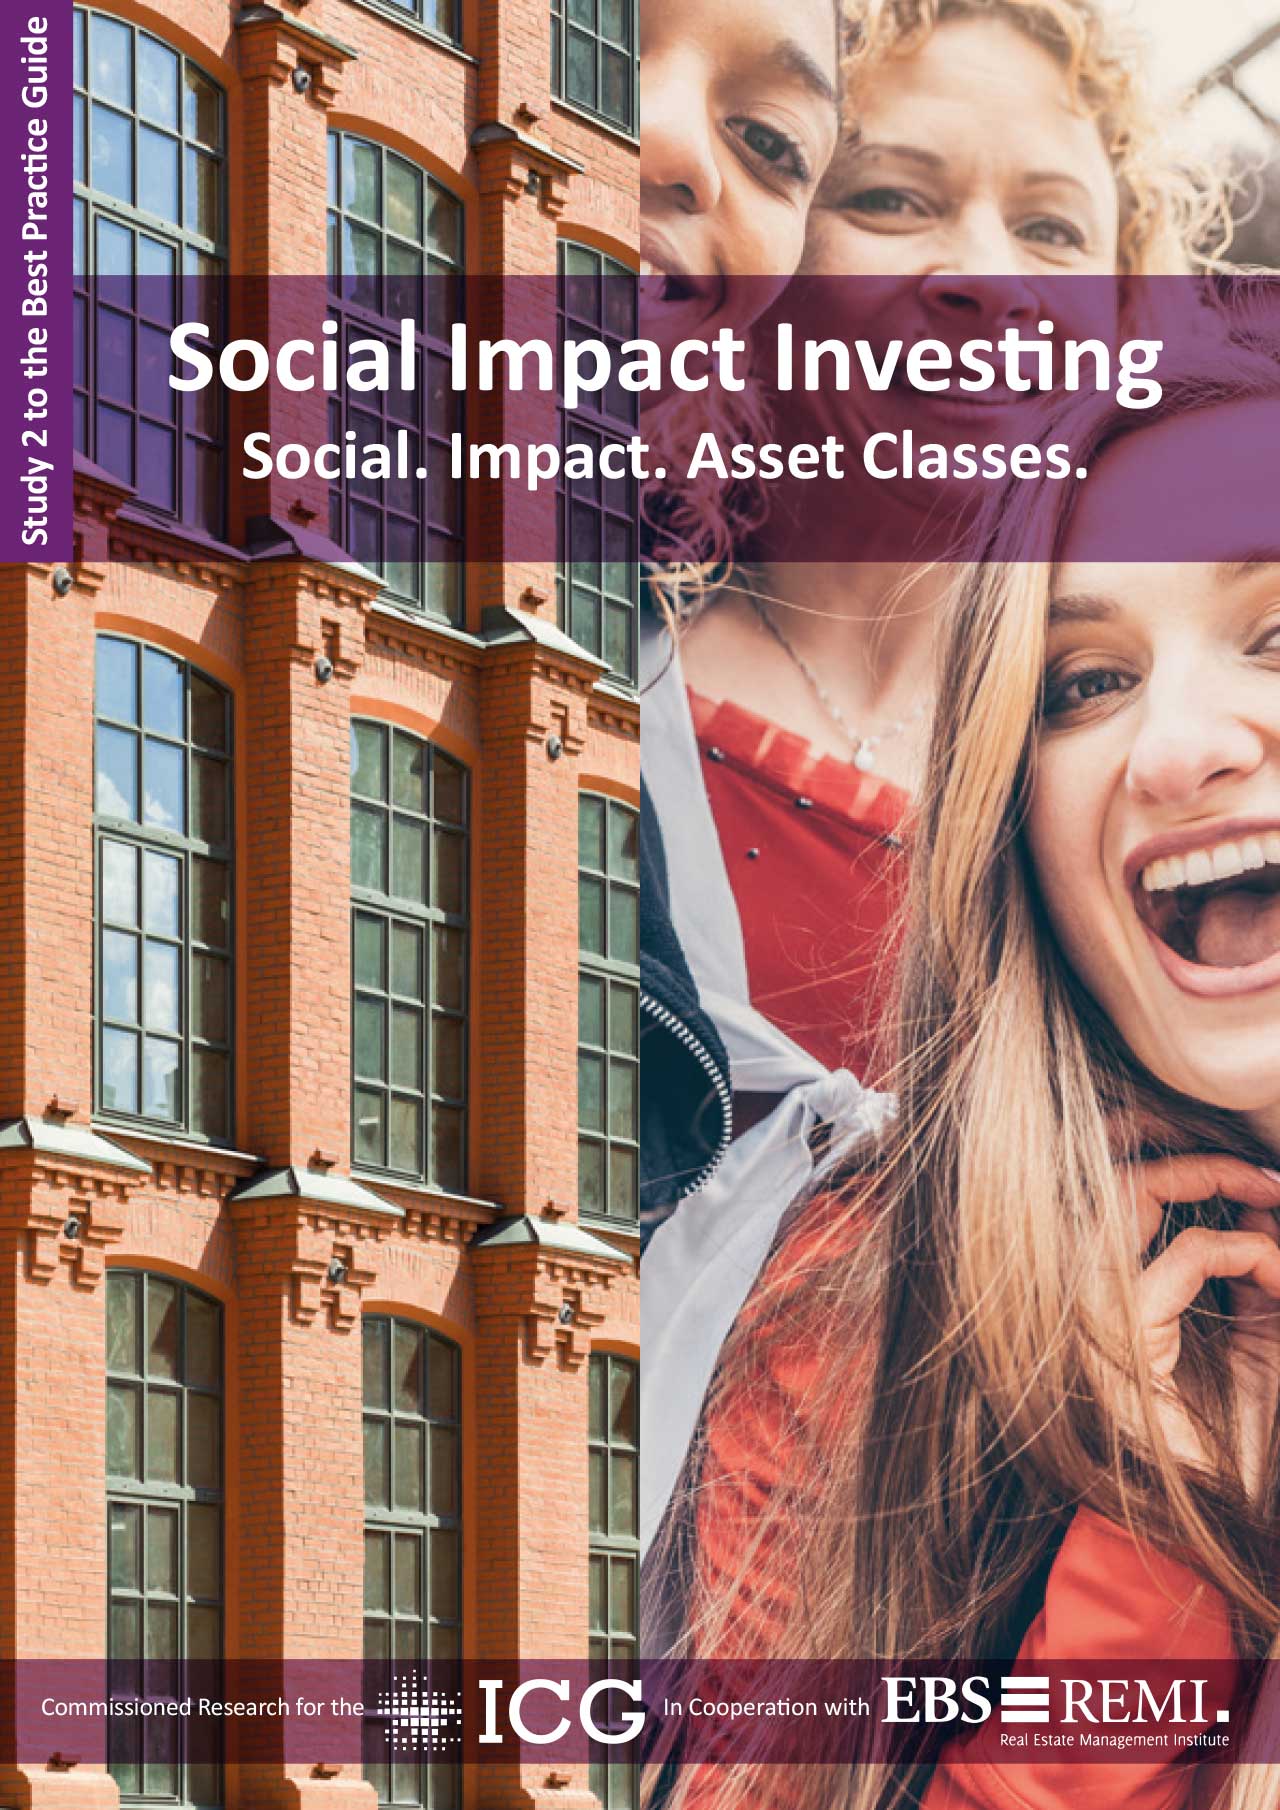 Social Impact Investing - Social. Impcat. Asset Classes